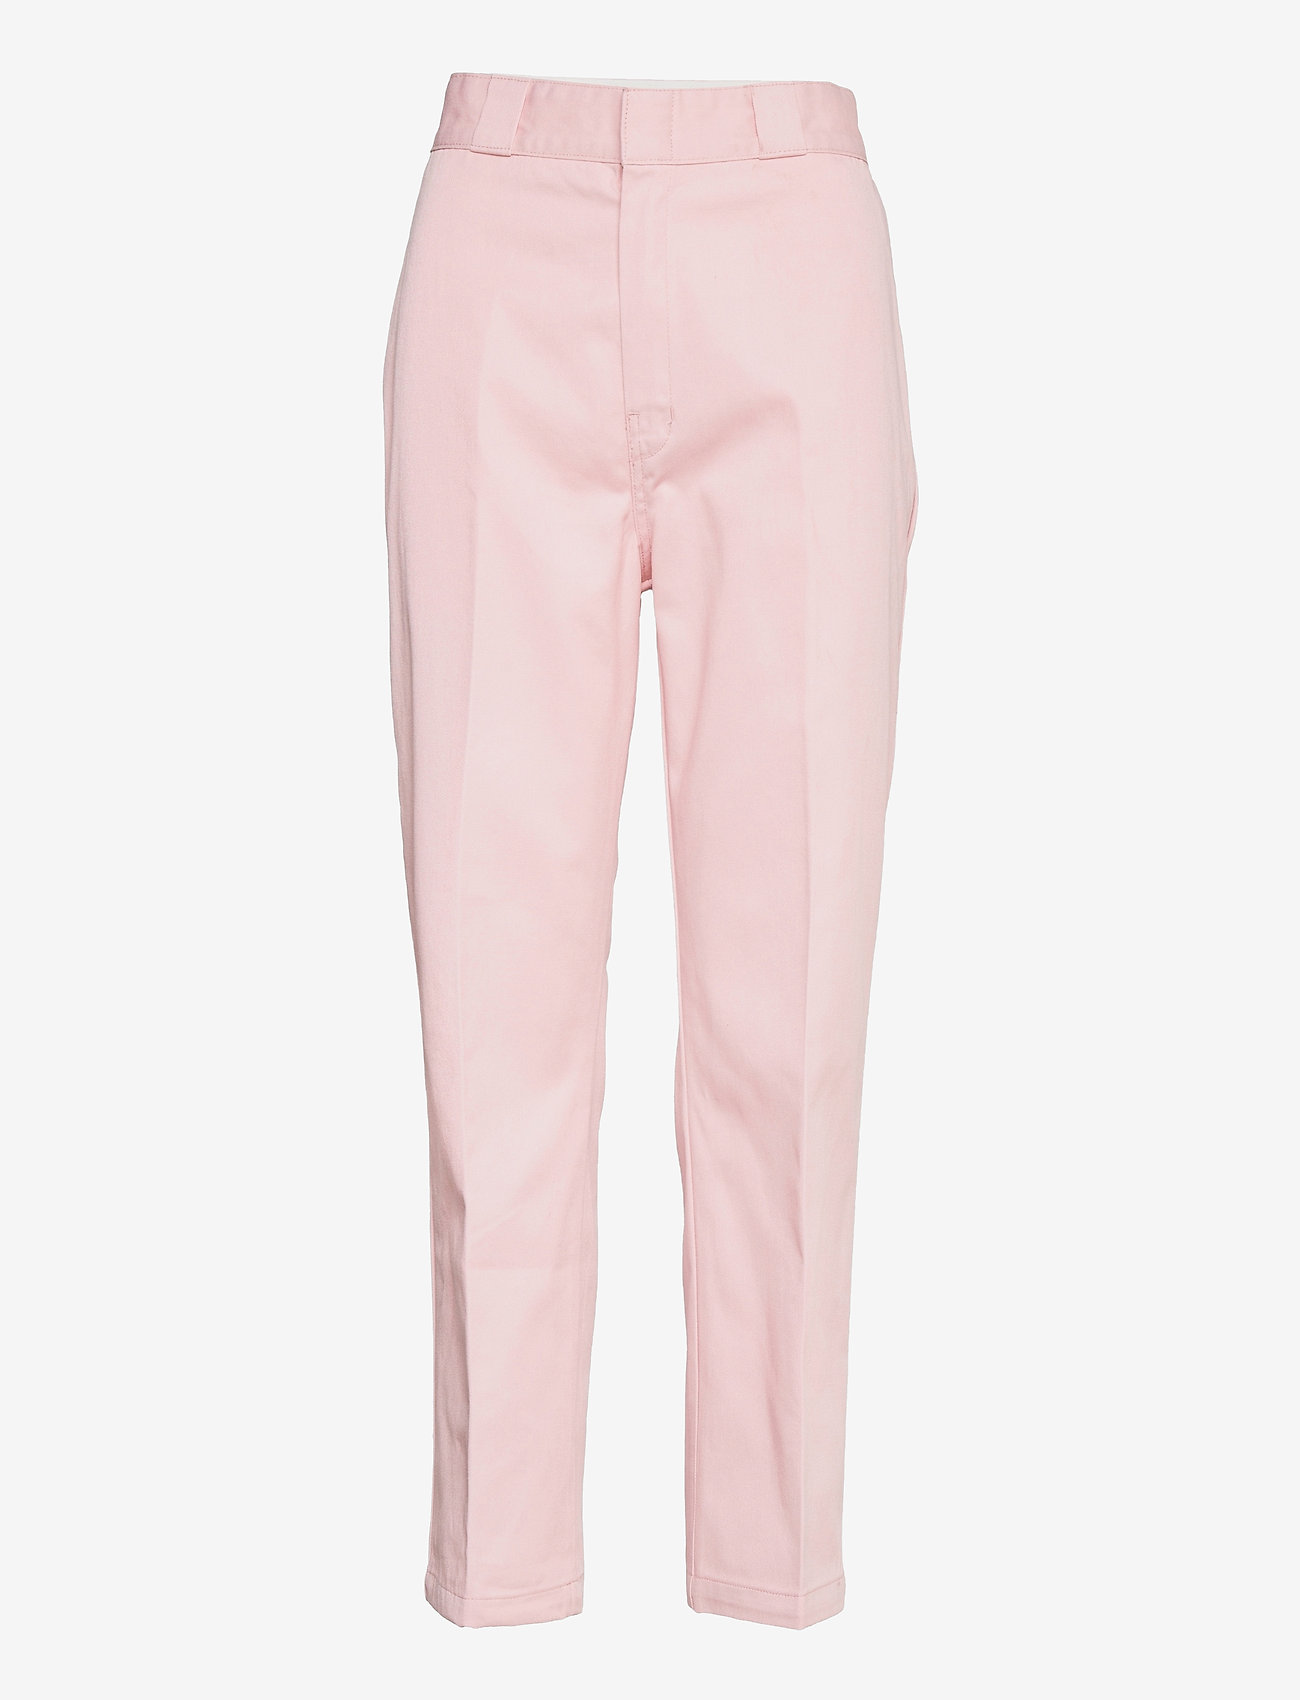 Dickies - ELIZAVILLE FIT WORK PANT - rette bukser - light pink - 0